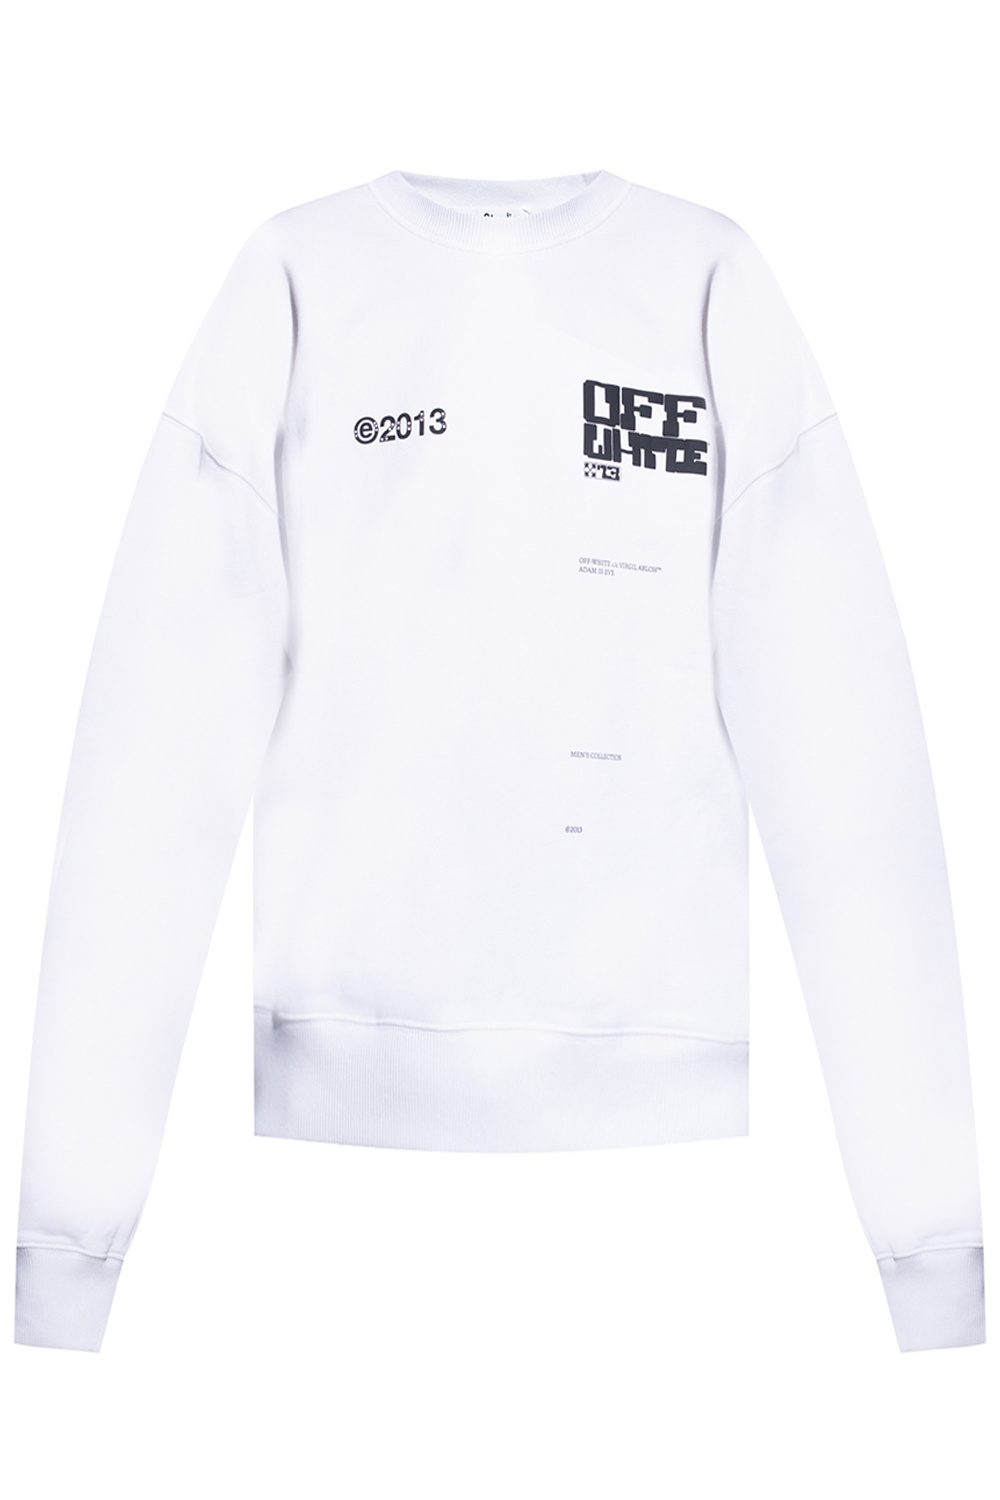 Off-White Nike Air Force 1 Low Malachite Shirts